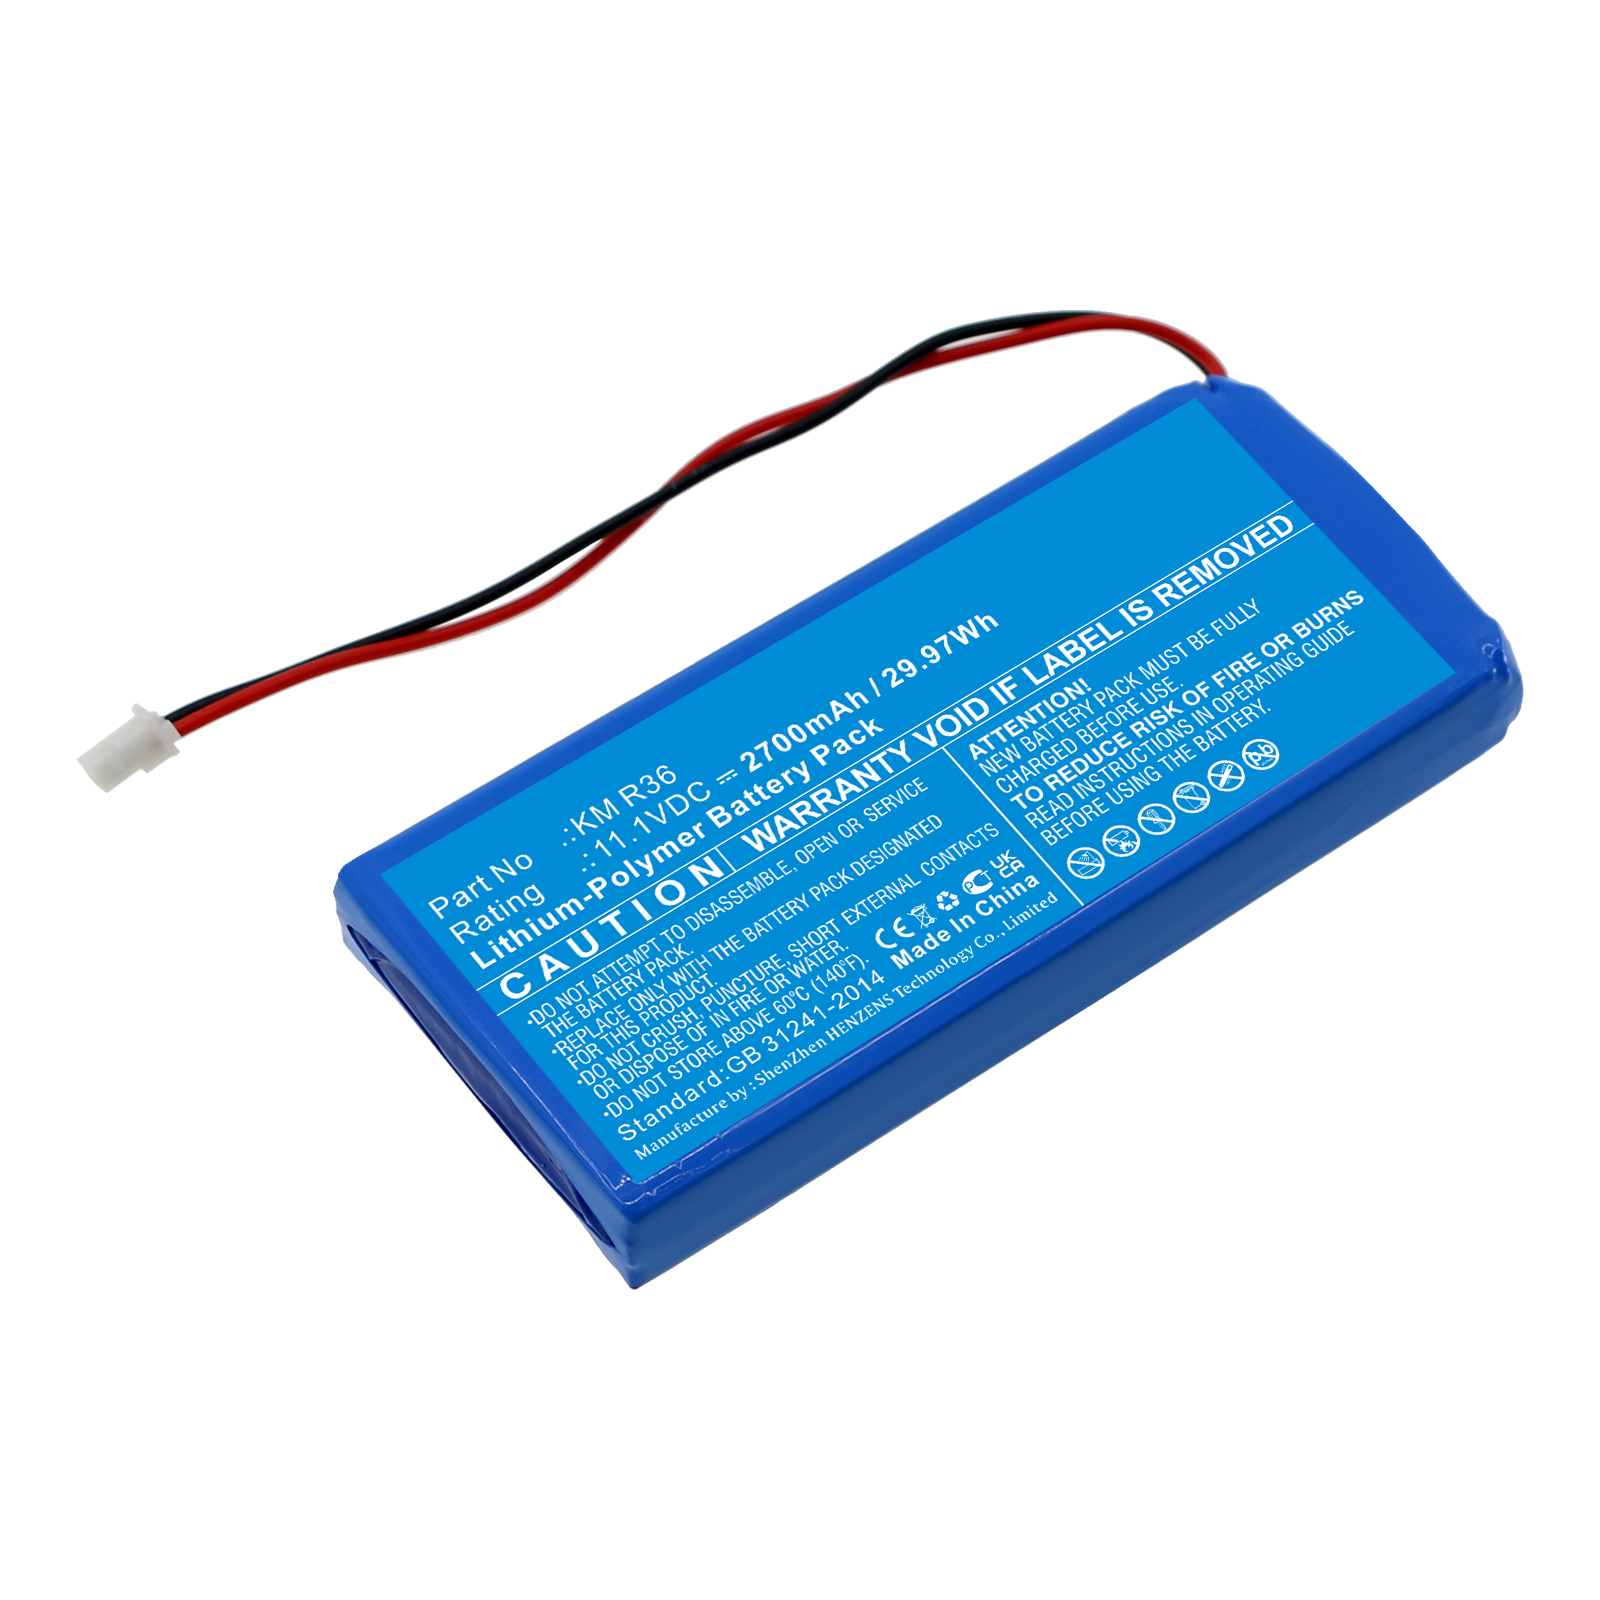 Synergy Digital Equipment Battery, Compatible with Kanomax KM R36 Equipment Battery (Li-Pol, 11.1V, 2700mAh)